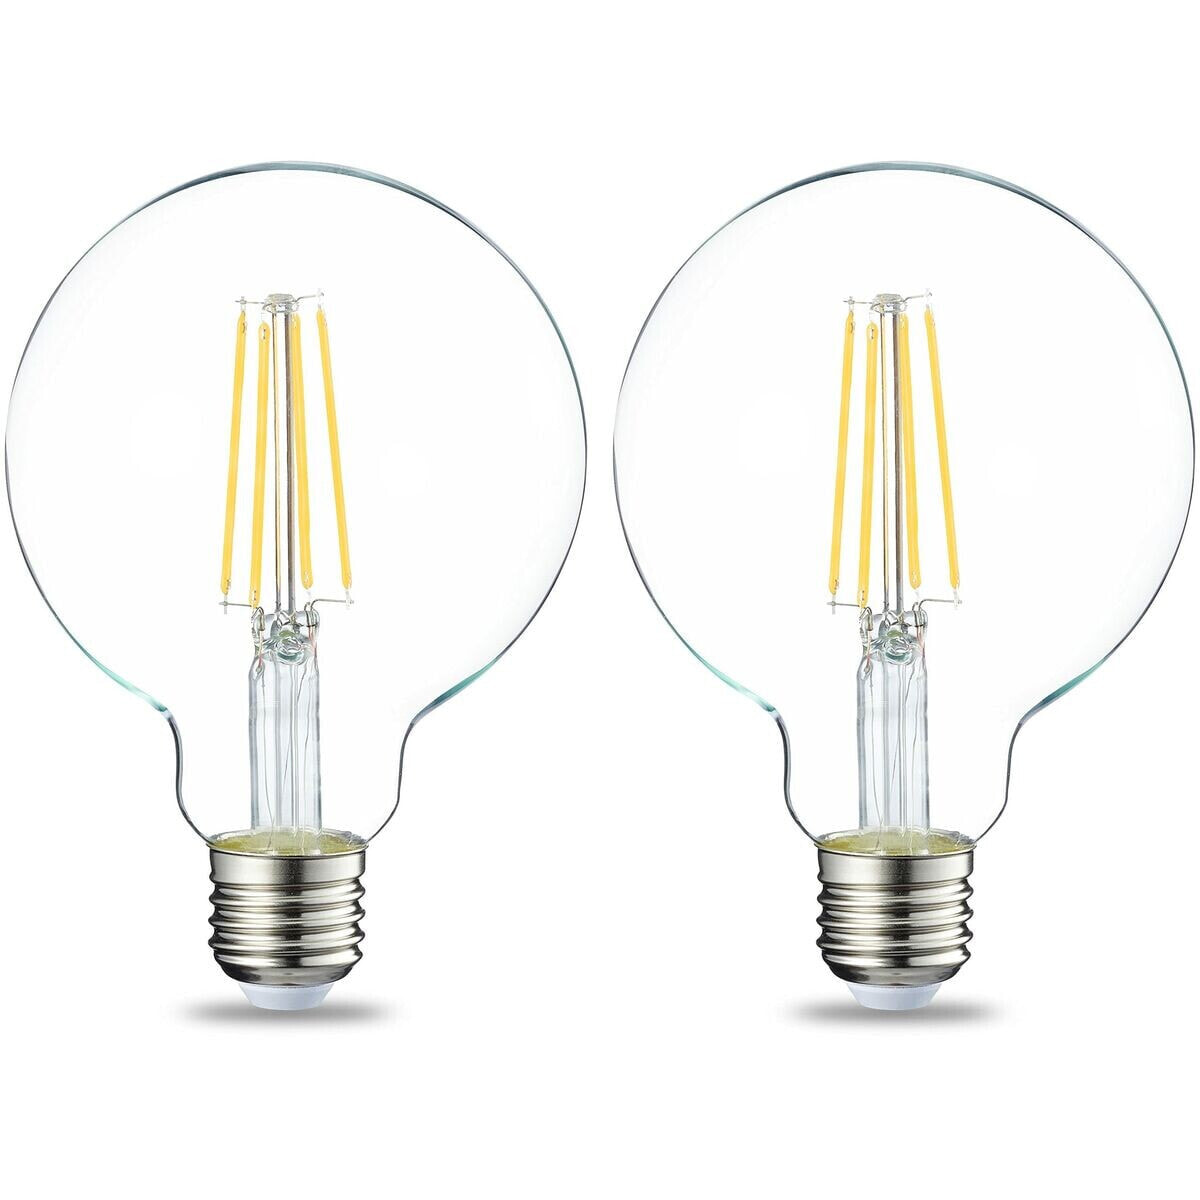 LED lamp Amazon Basics 929001387904 7 W E27 GU10 60 W (Refurbished A+)